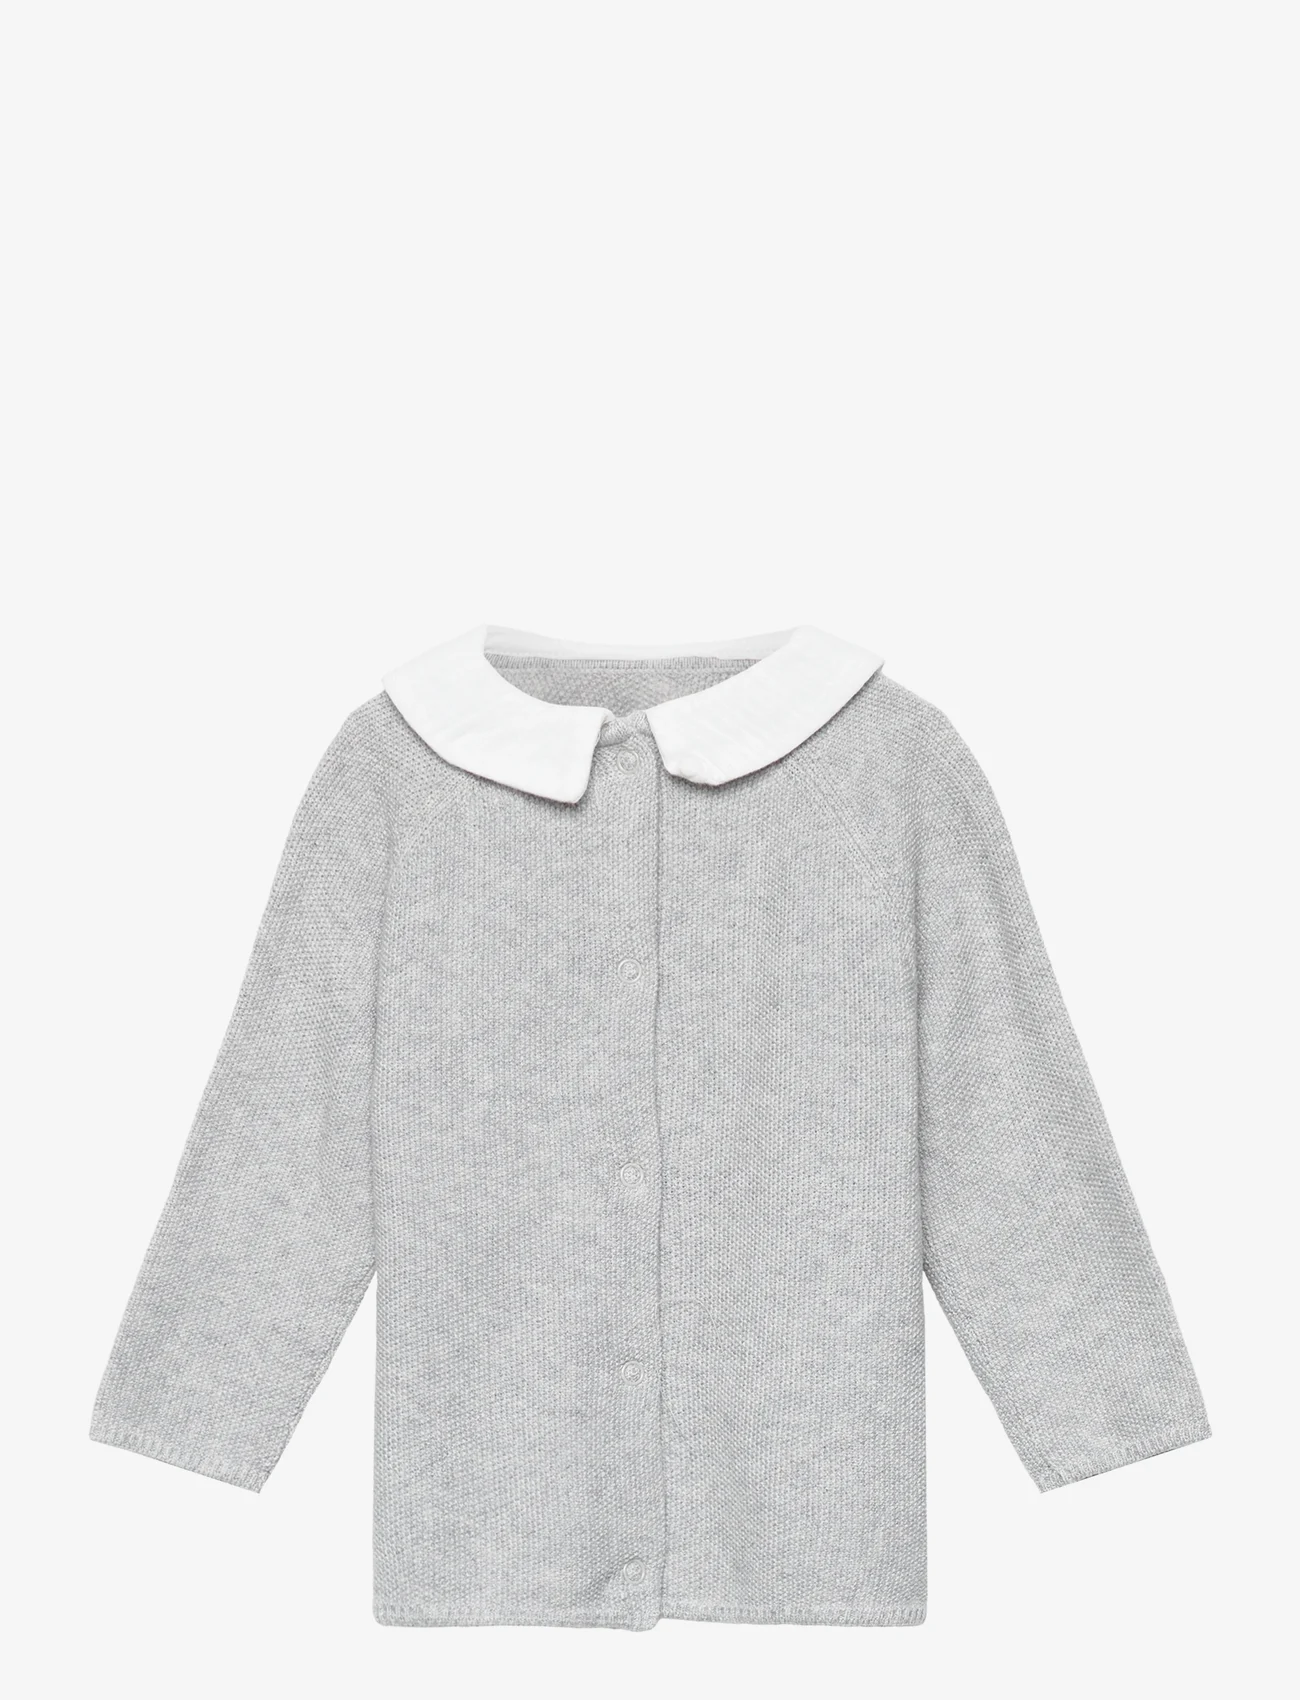 Mango - Camp-collar knit sweater - cardigans - medium grey - 0